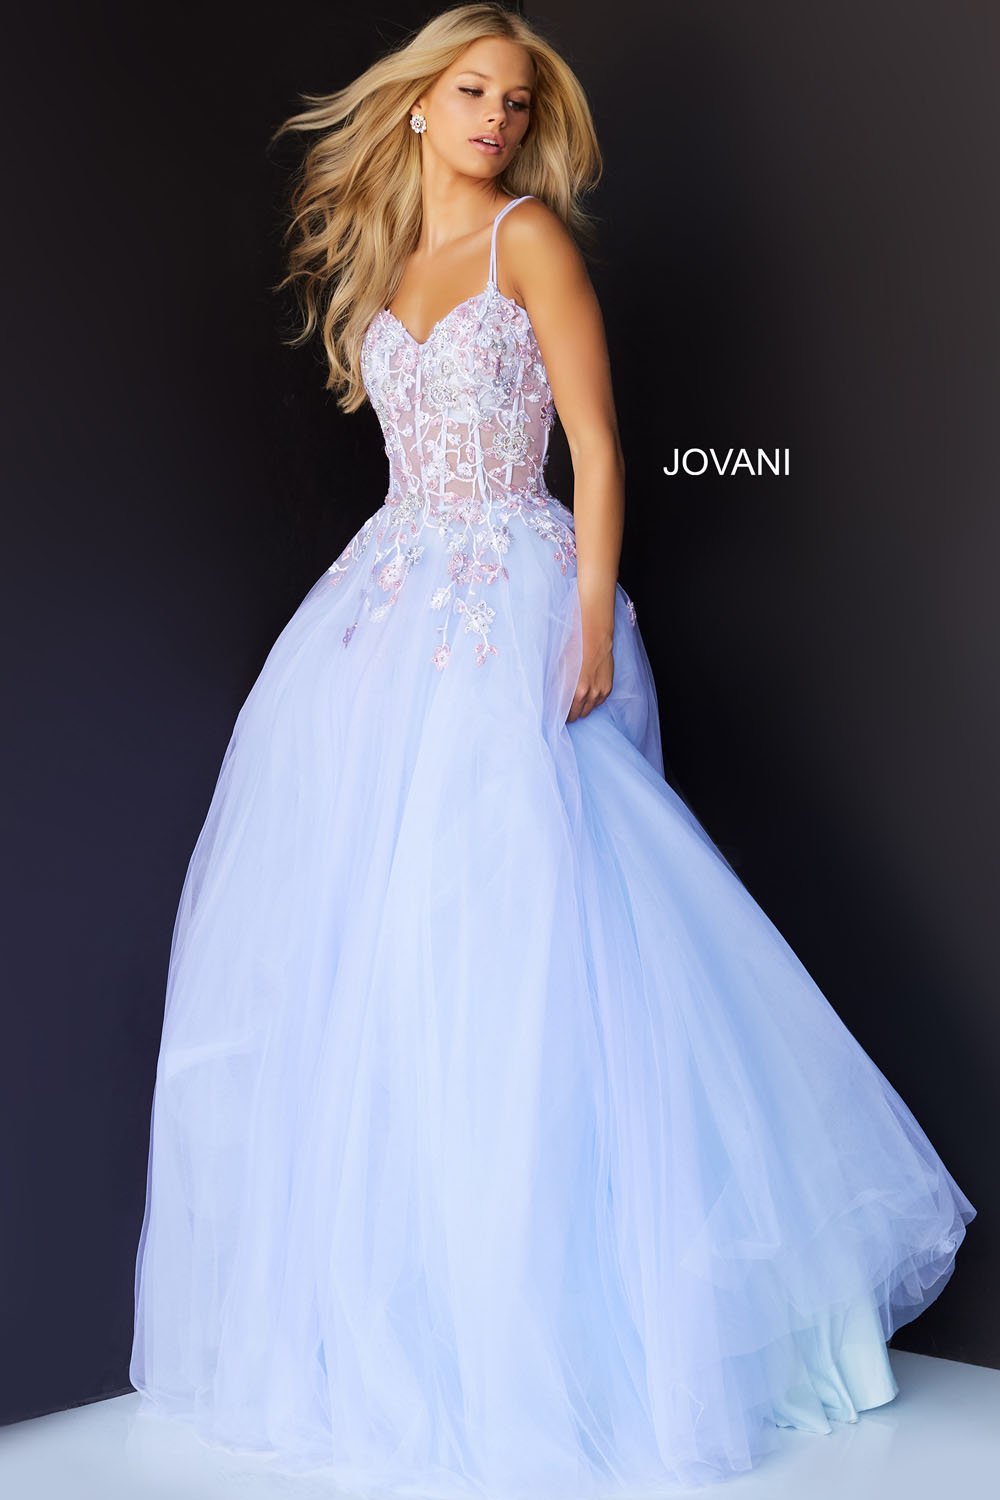 Jovani 06207 Lilac prom dresses images.